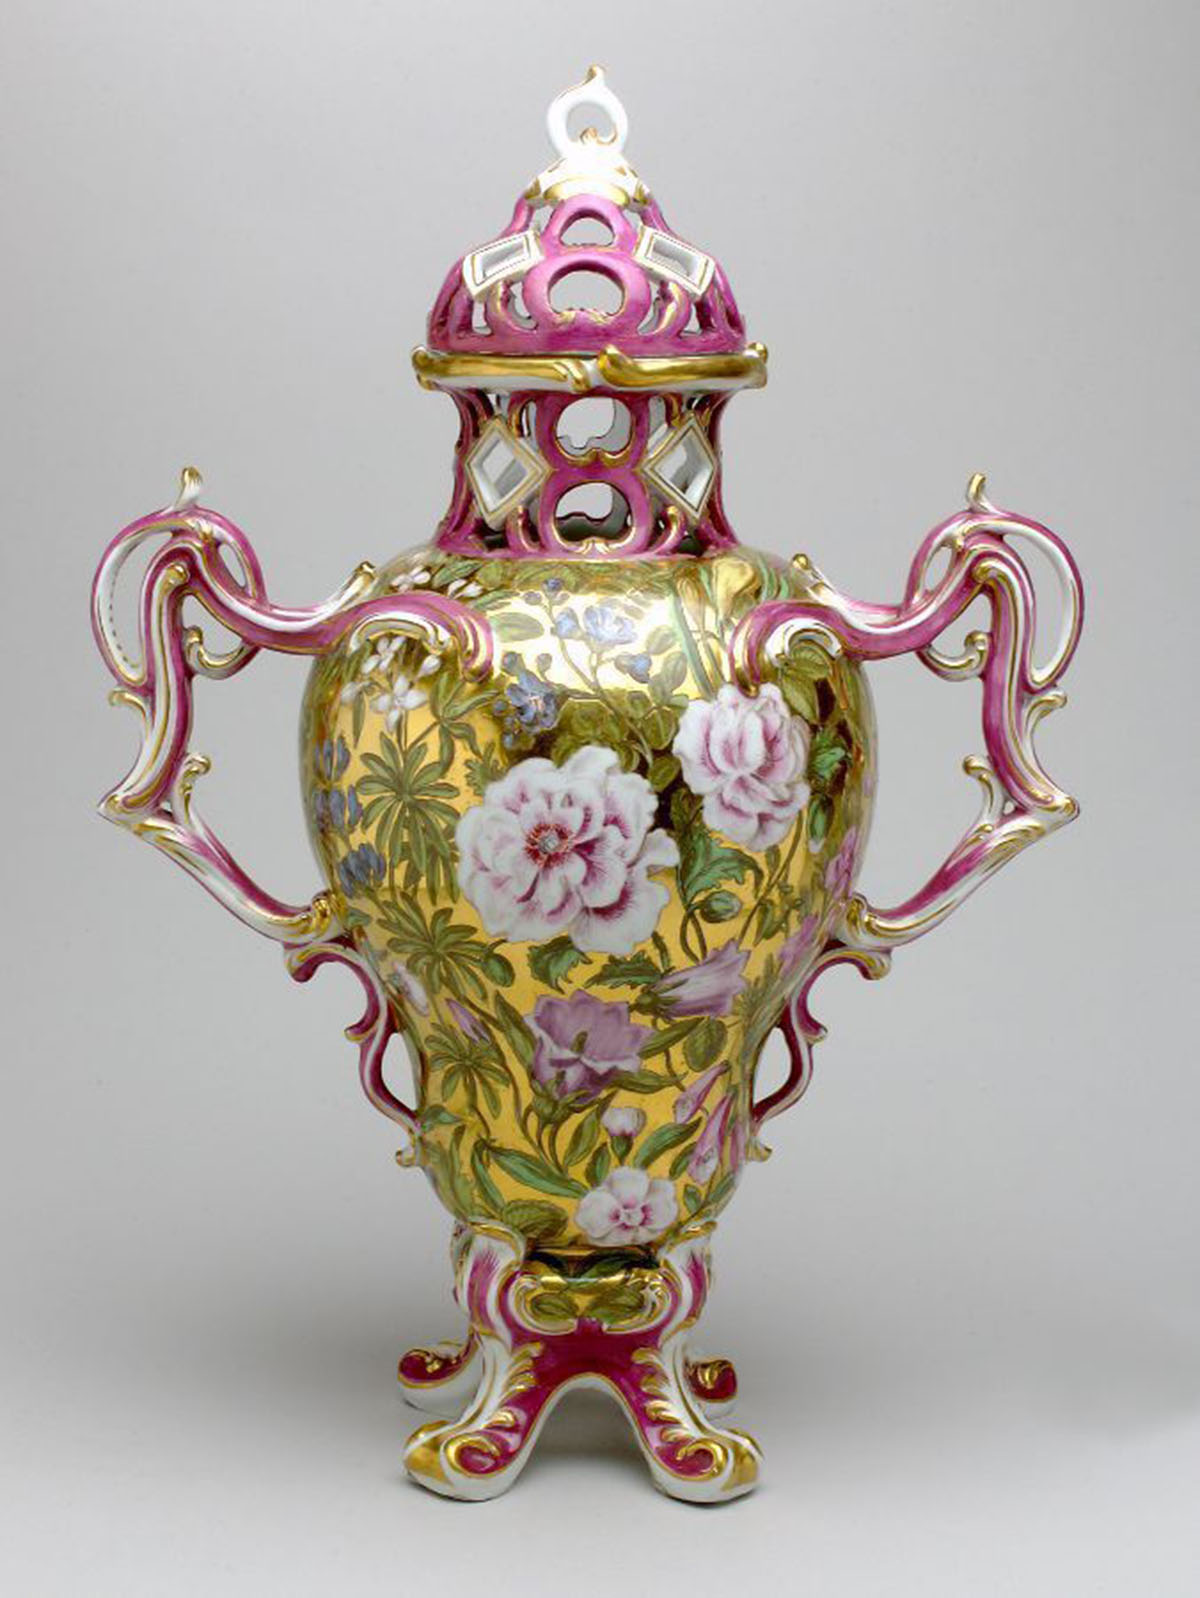 A porcelain vase with enamel and gilded decoration.